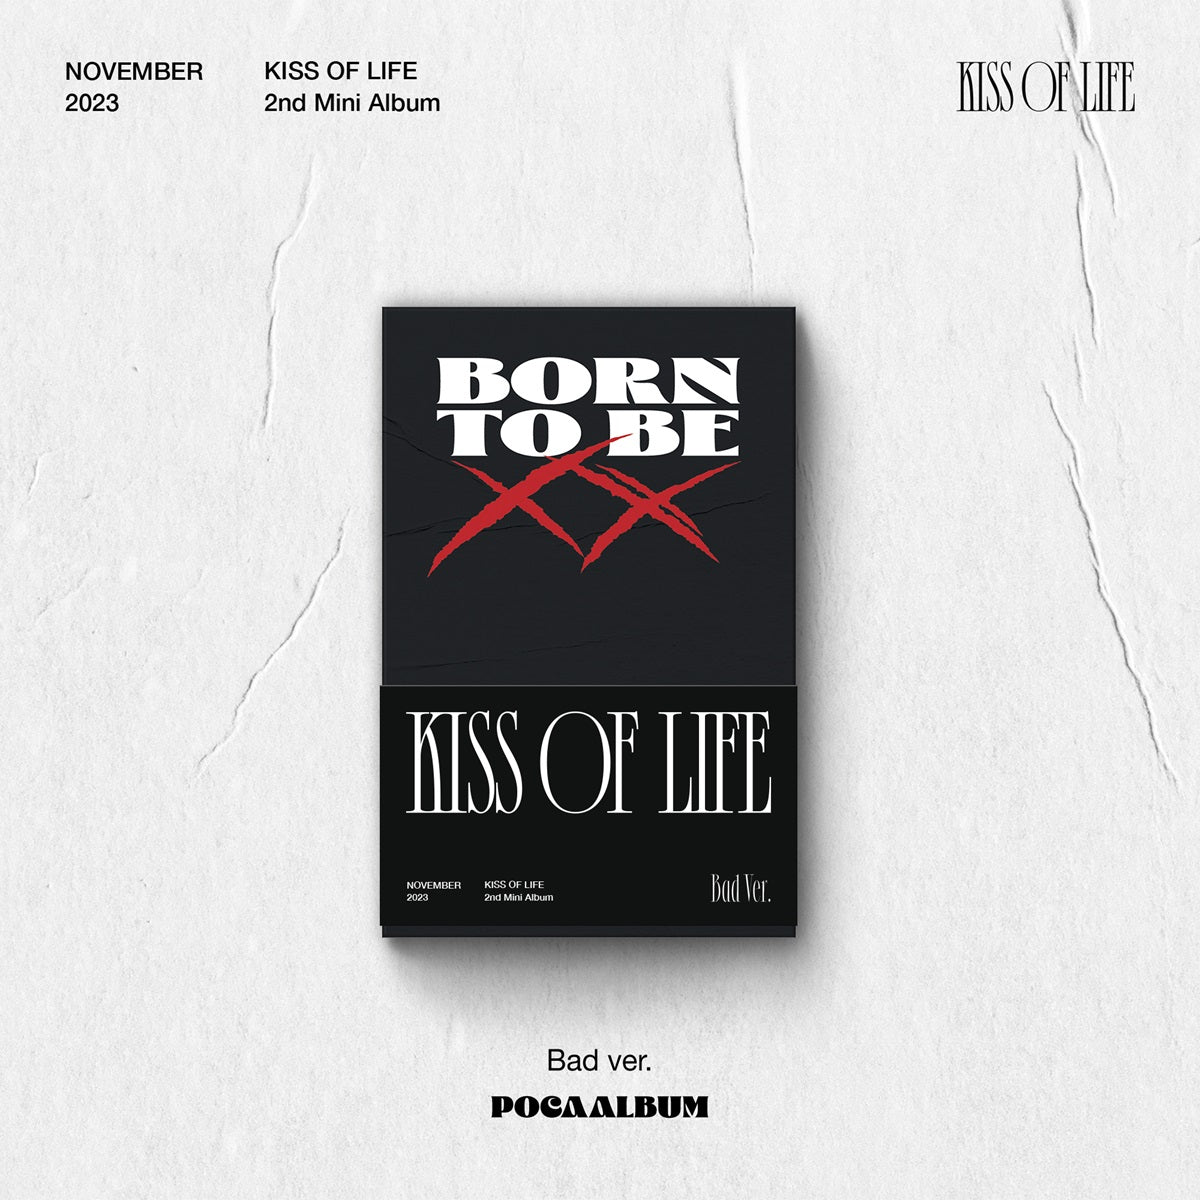 KISS OF LIFE 2ND MINI ALBUM 'BORN TO BE XX' (POCA) BAD VERSION COVER